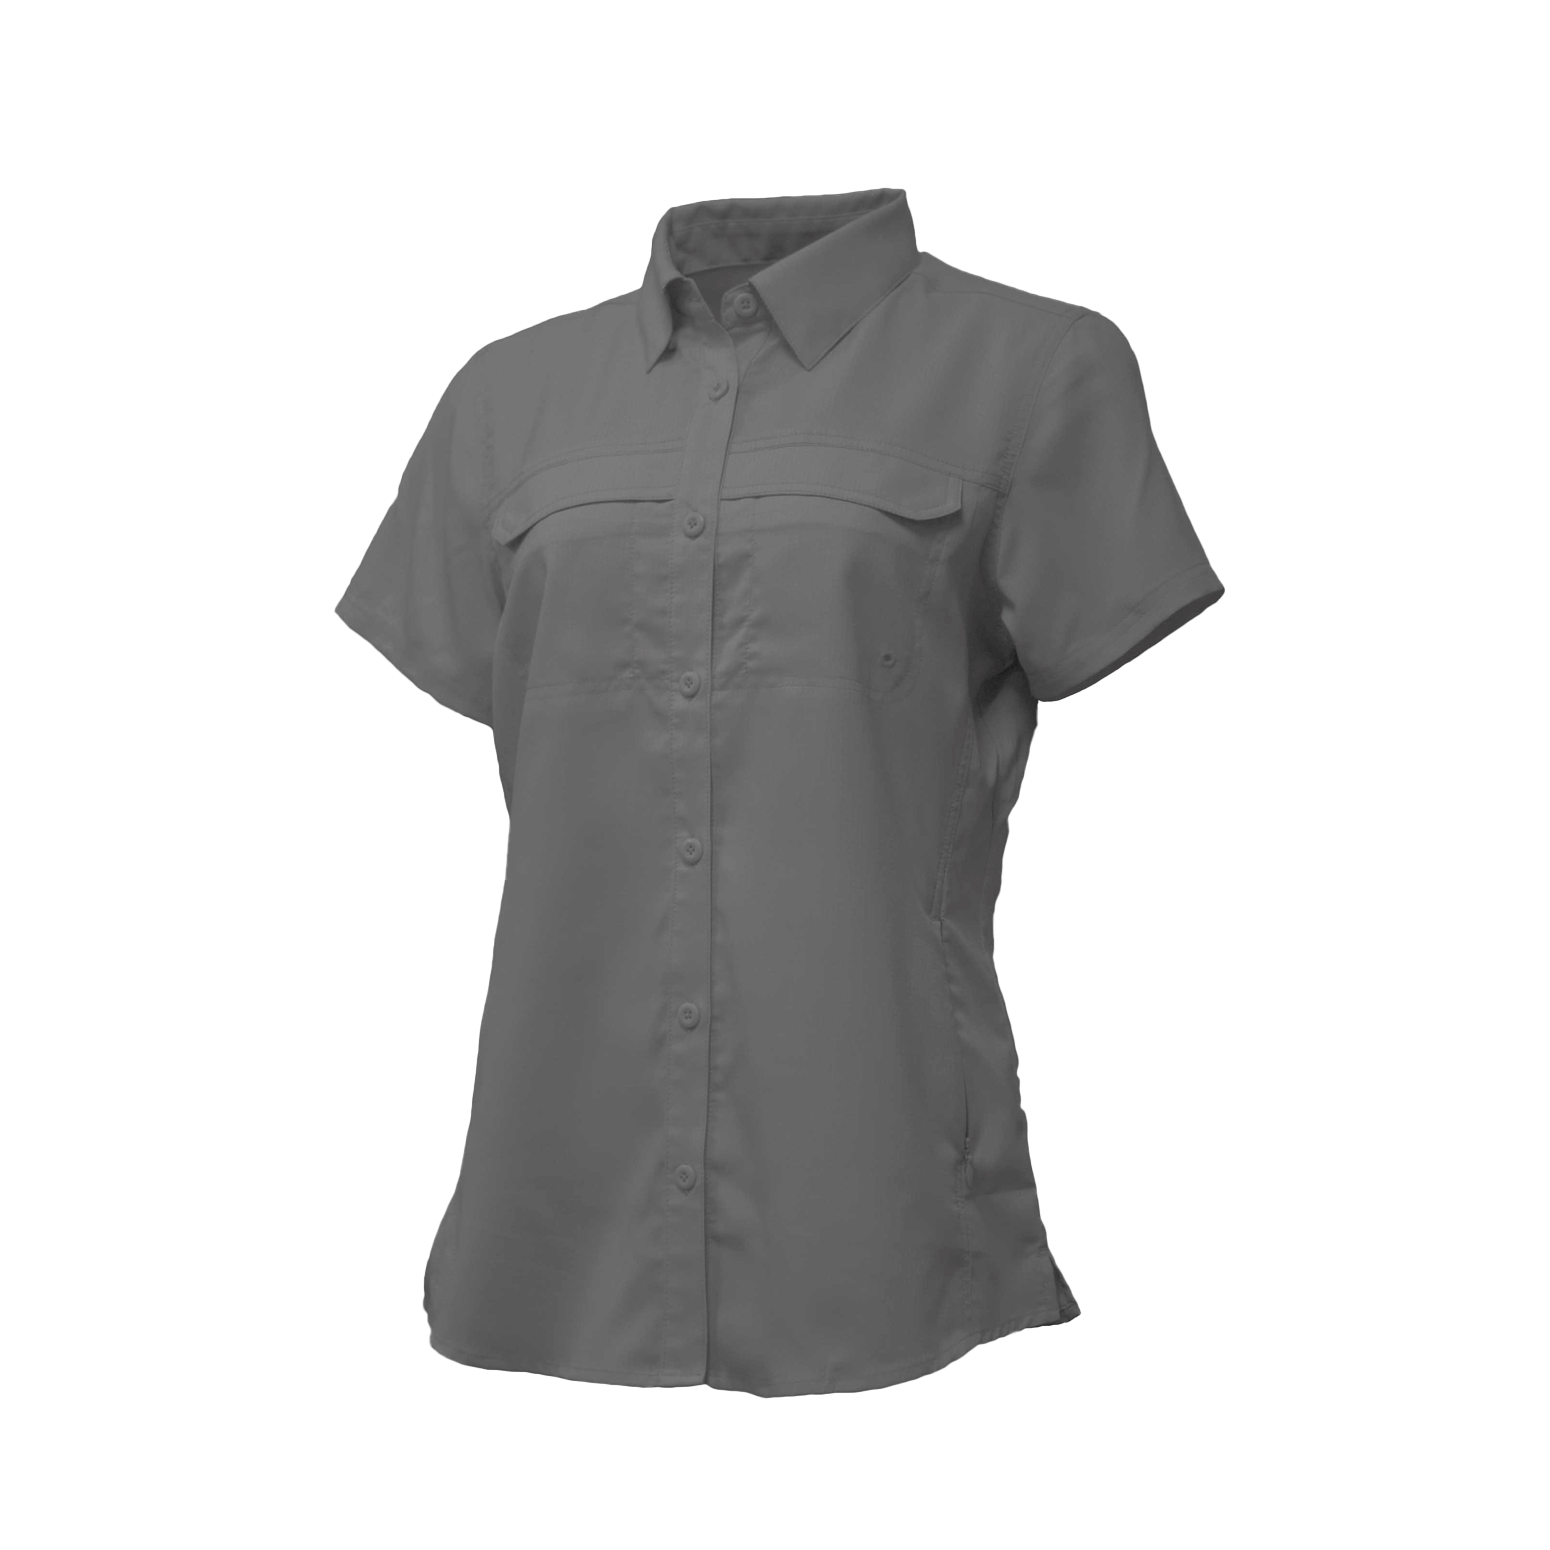 Wholesale black short sleeves fishing shirts - AliExpress